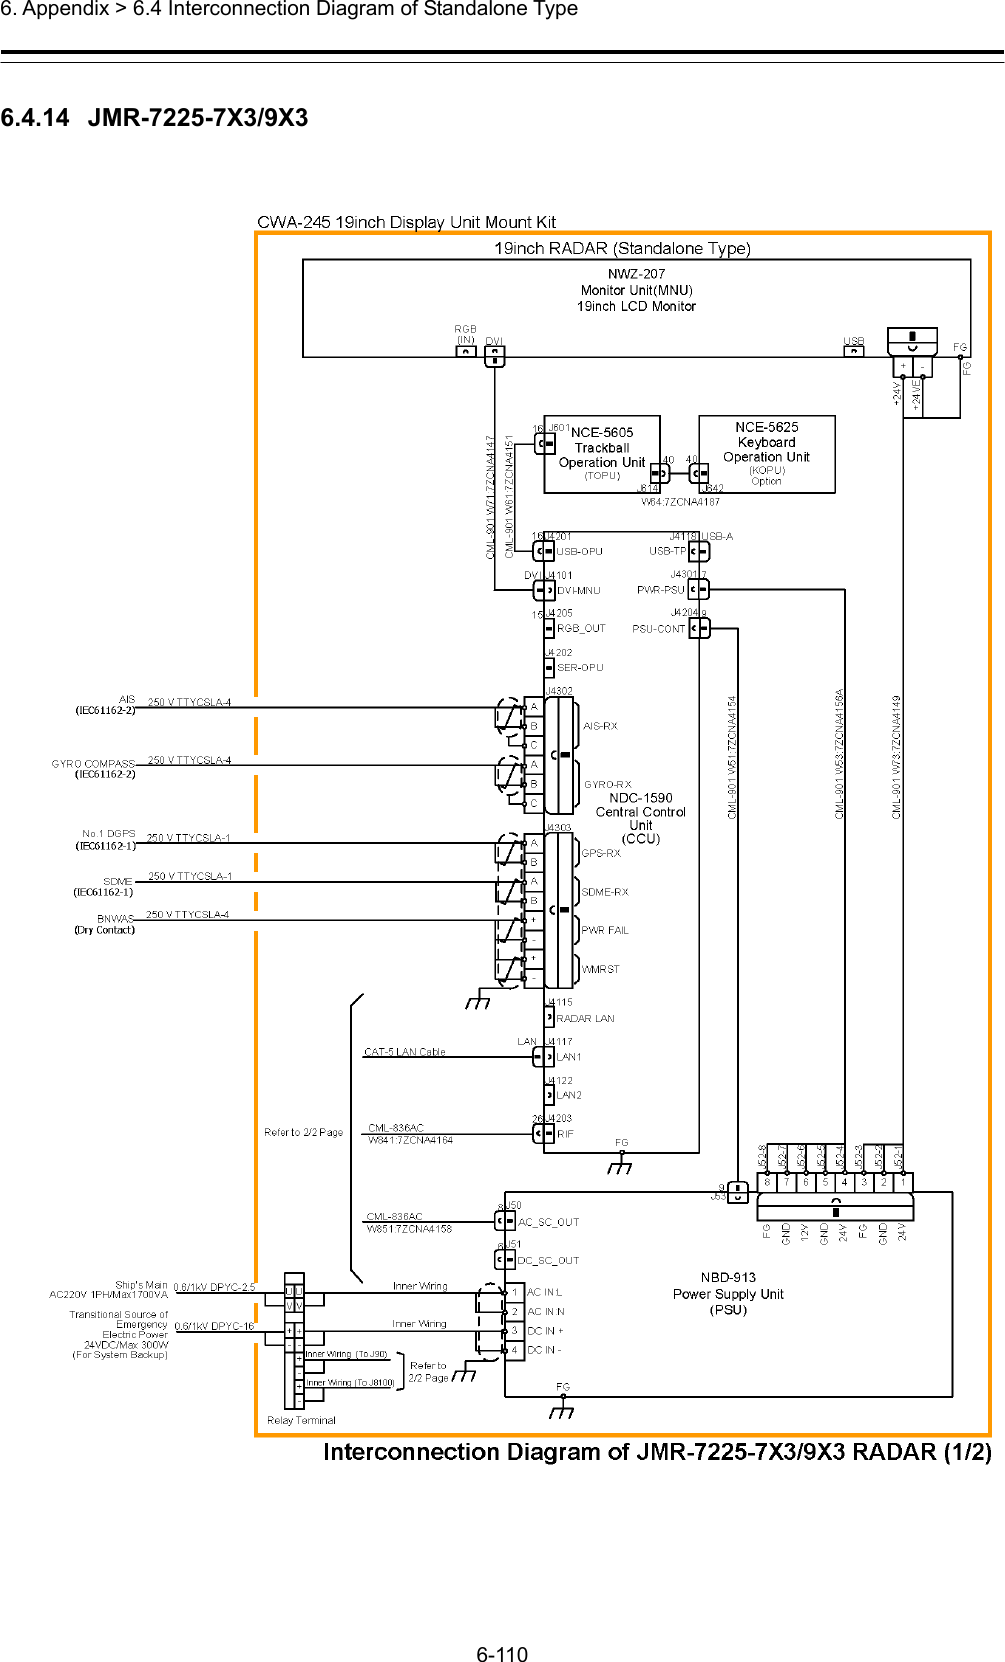  6. Appendix &gt; 6.4 Interconnection Diagram of Standalone Type 6-110  6.4.14  JMR-7225-7X3/9X3 